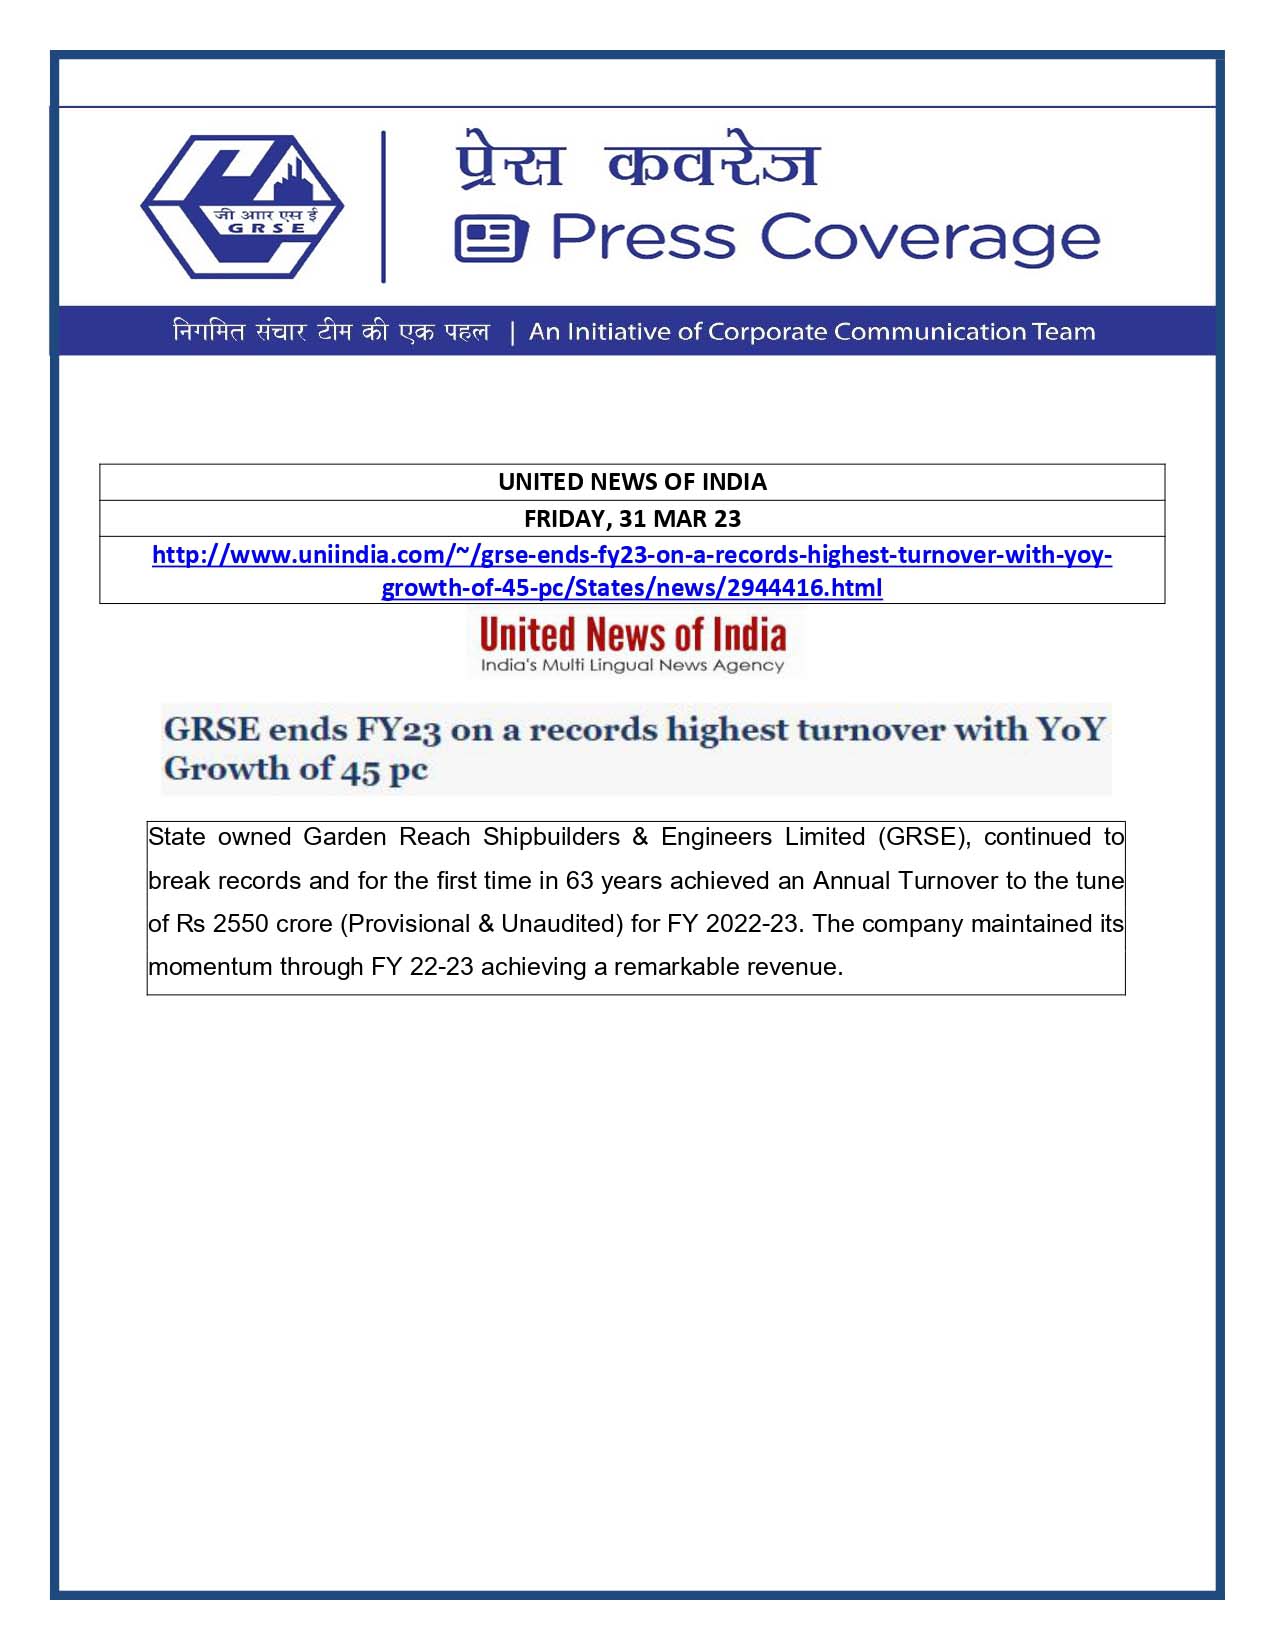 United News of India 31 Mar 23